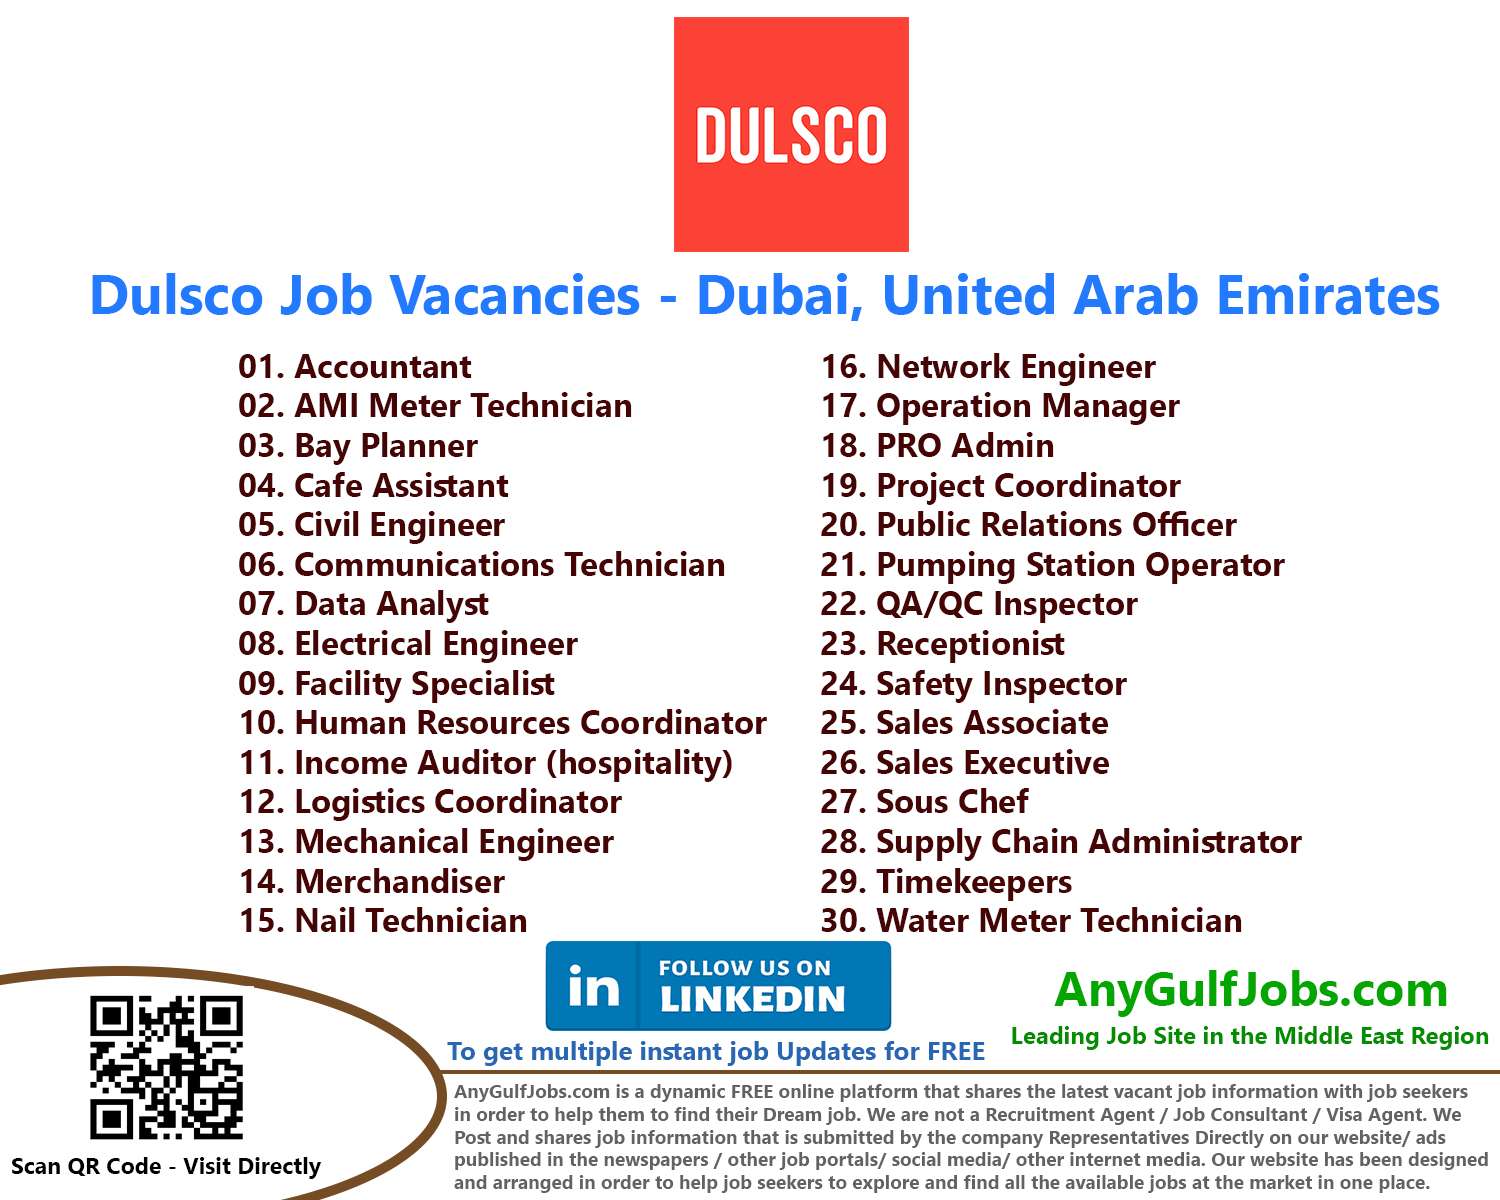 Dulsco Job Vacancies - Dubai, United Arab Emirates